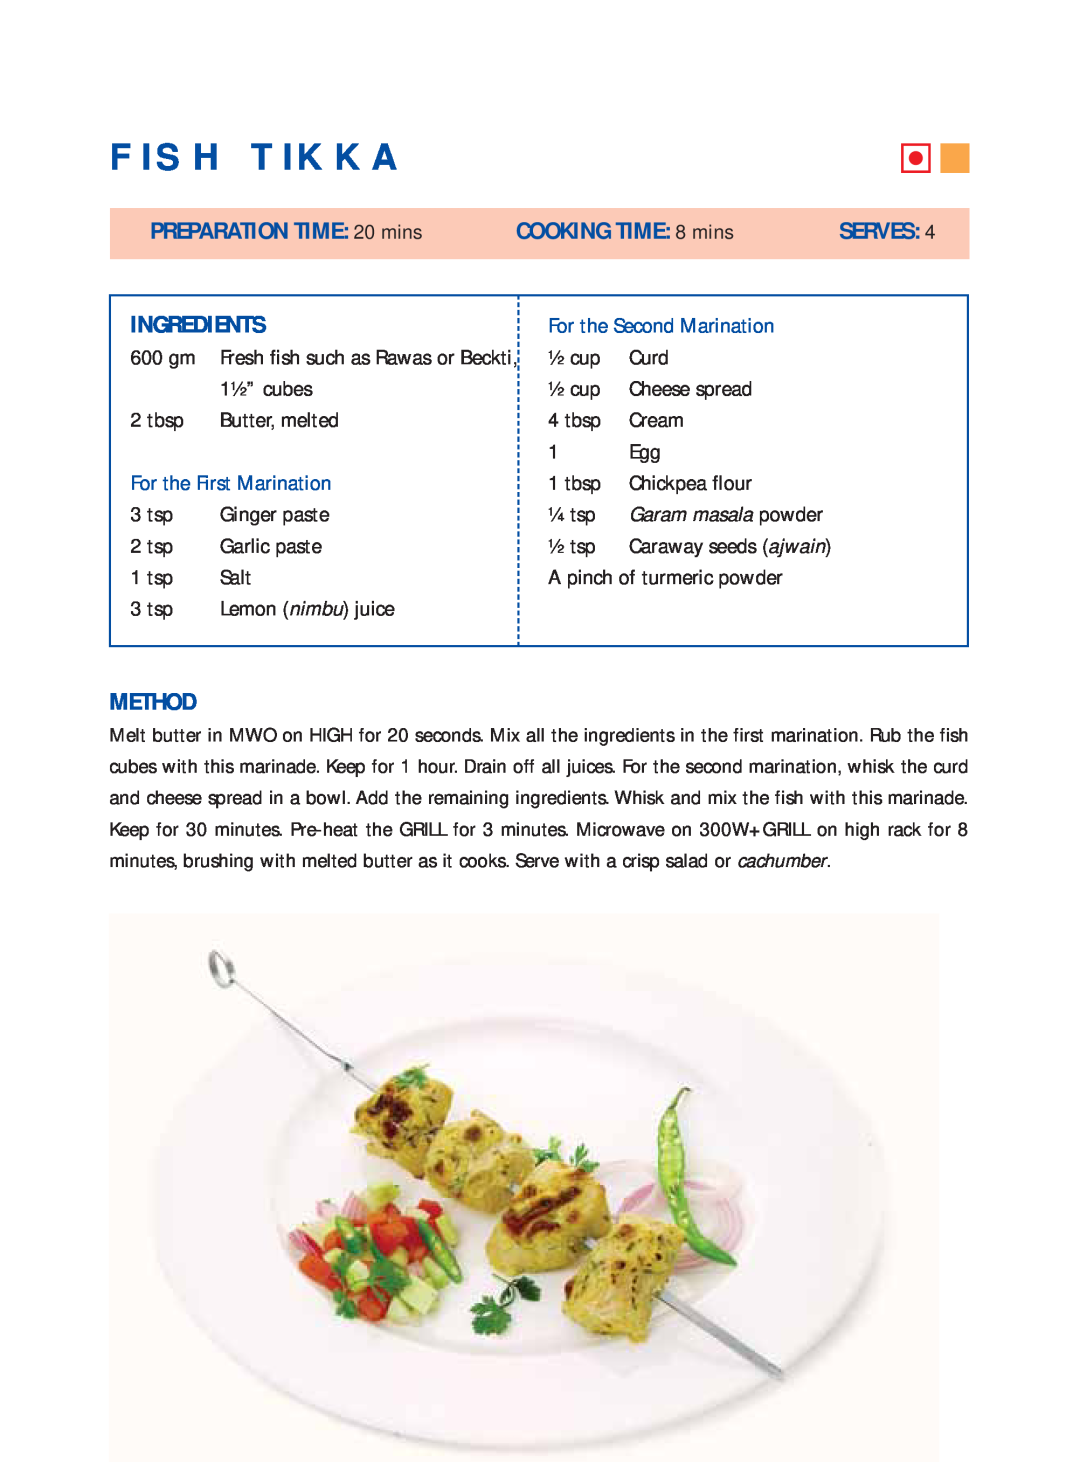 Samsung Microwave Oven warranty Fish Tikka, PREPARATION TIME: 20 mins, COOKING TIME 8 mins, Serves, Ingredients, Method 